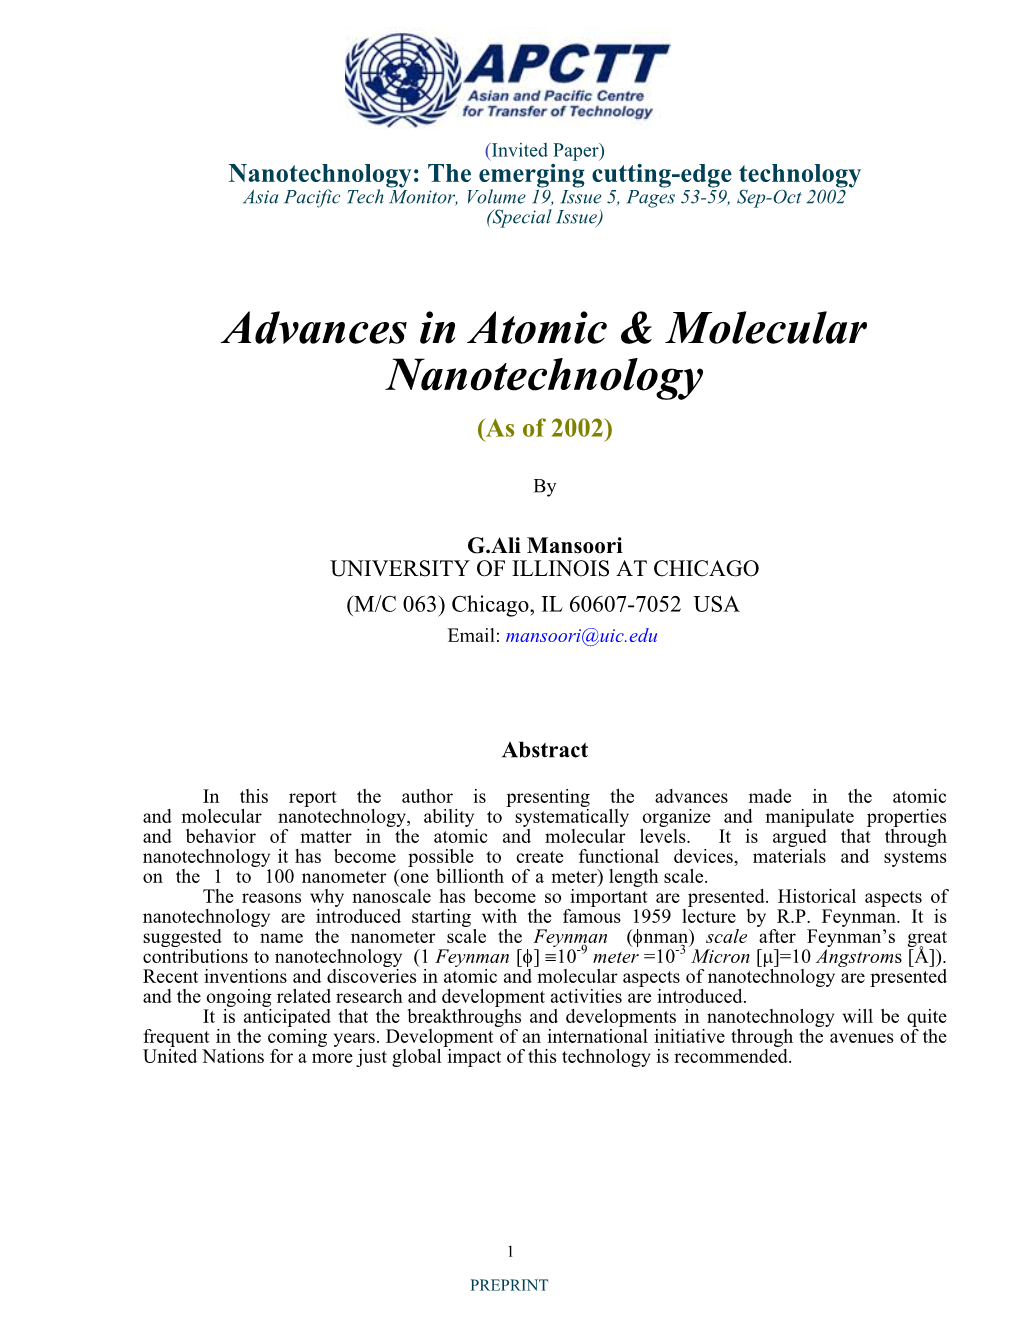 Advances in Atomic & Molecular Nanotechnology